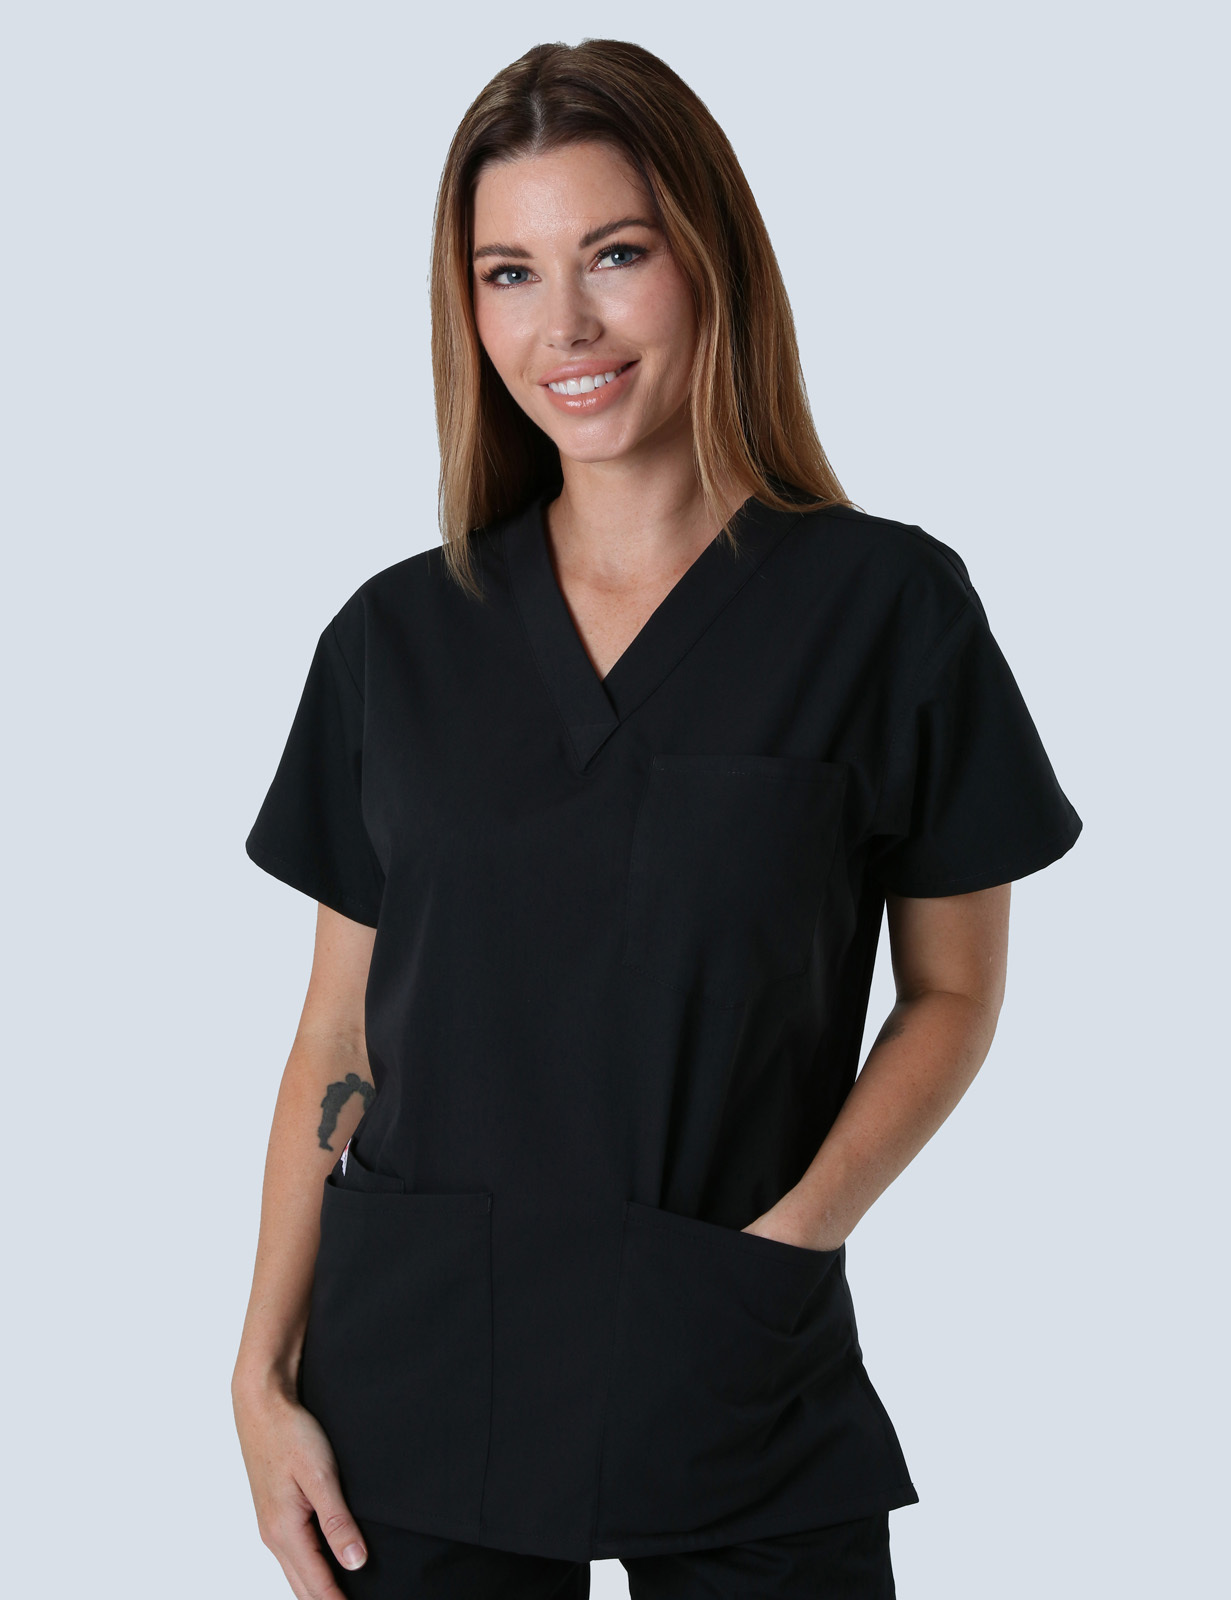 Queensland Children's Hospital Emergency Department Assistant in Nursing  Uniform Top Bundle  (4 Pocket Top in Black incl Logos)